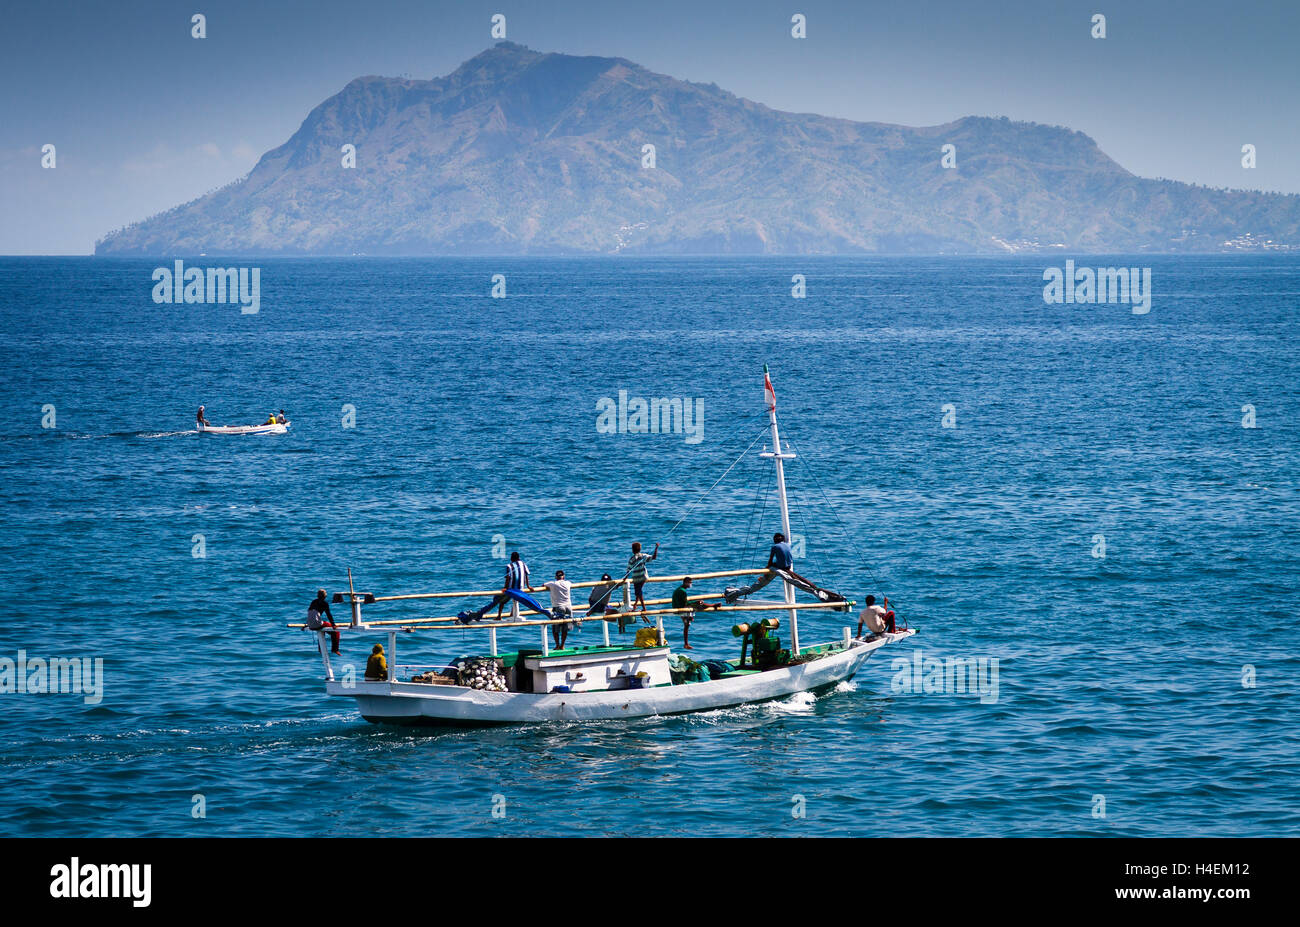 Fish boat in a coastal landscape. Stock Photo